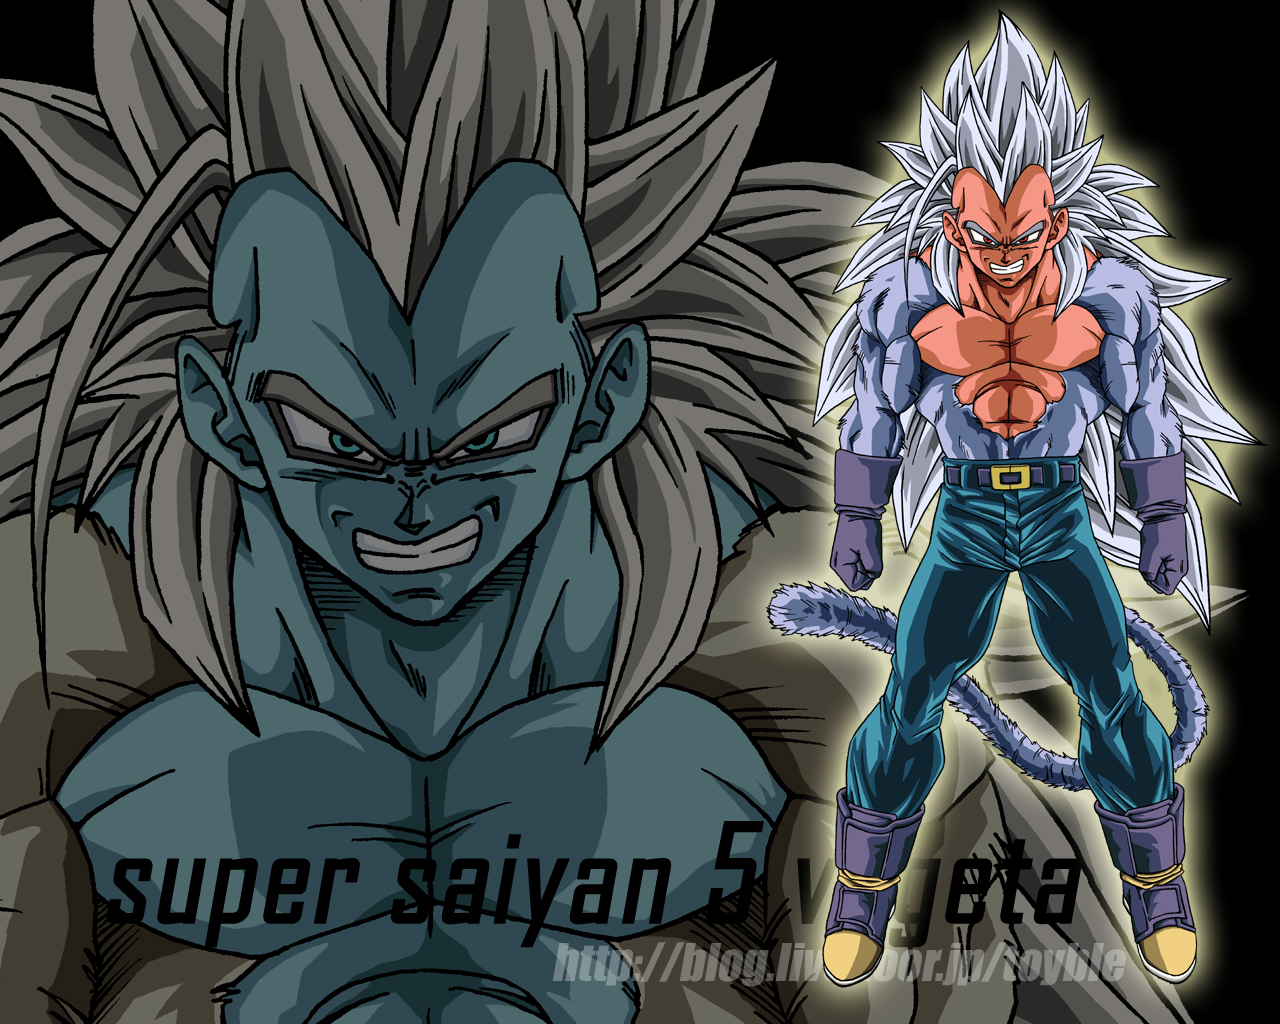 Super Saiyain 5 Is Dragon Ball's Wildest Final Form